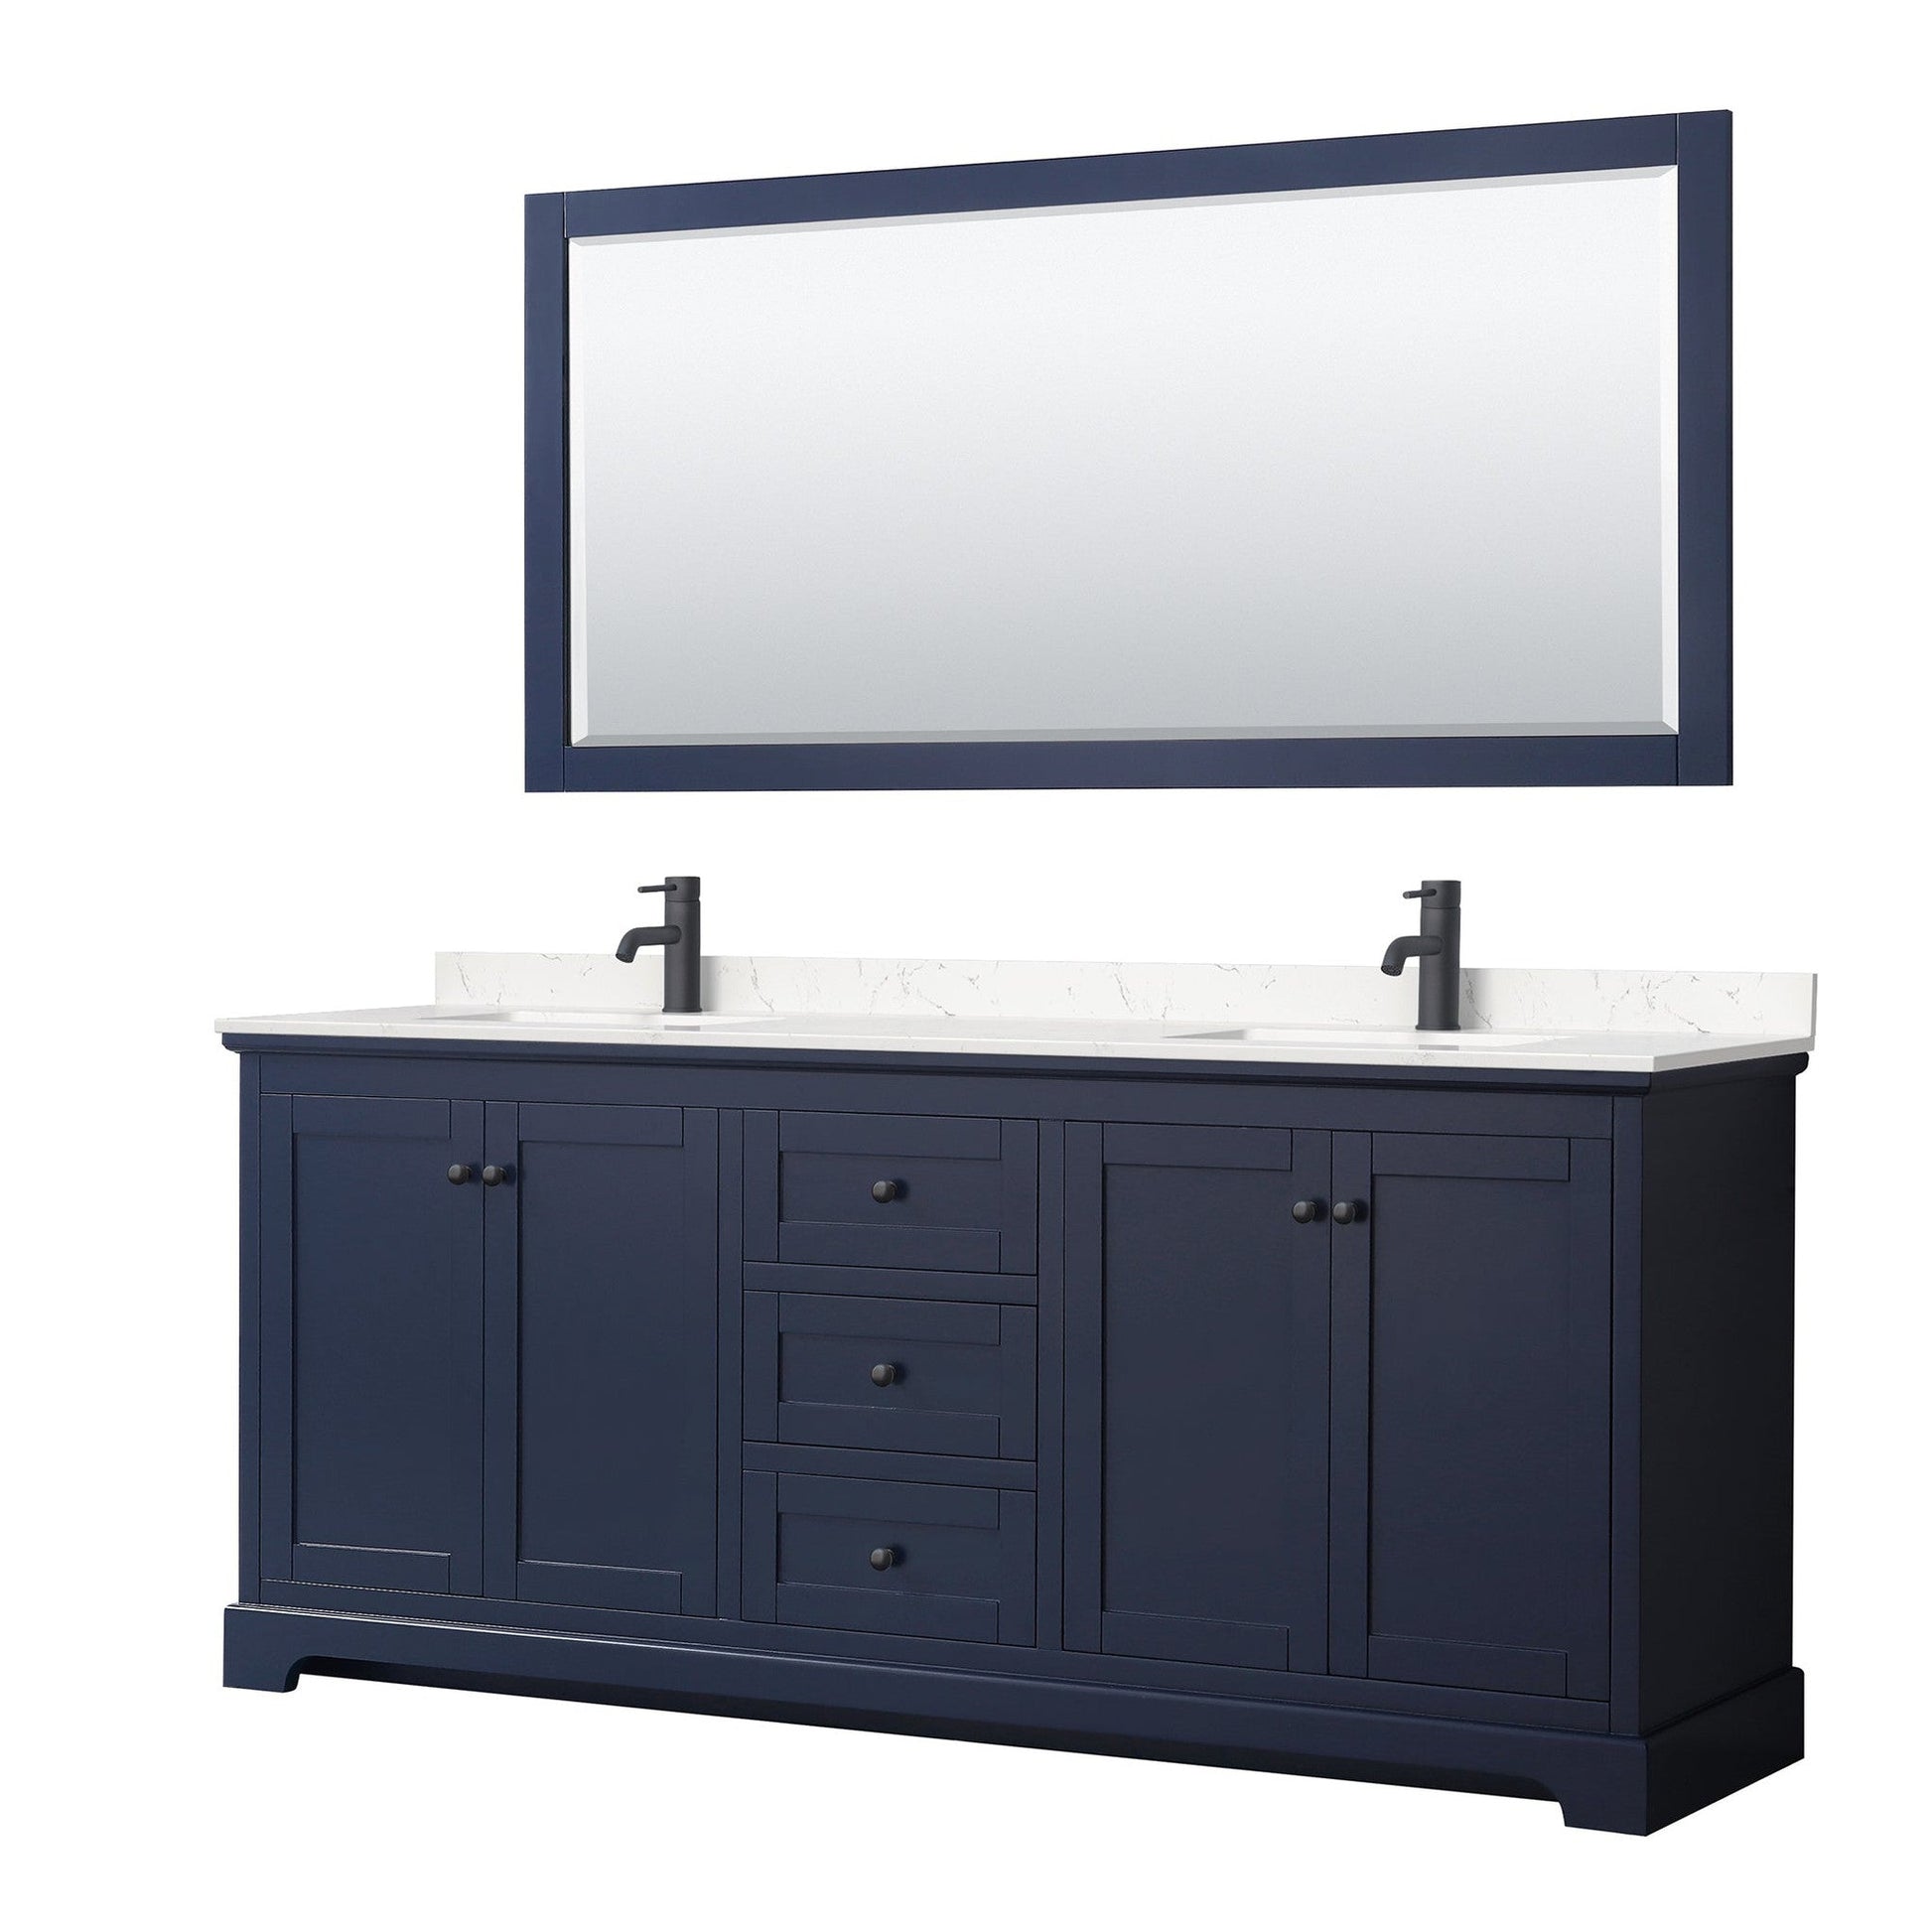 Avery 80" Double Bathroom Vanity in Dark Blue, Carrara Cultured Marble Countertop, Undermount Square Sinks, Matte Black Trim, 70" Mirror